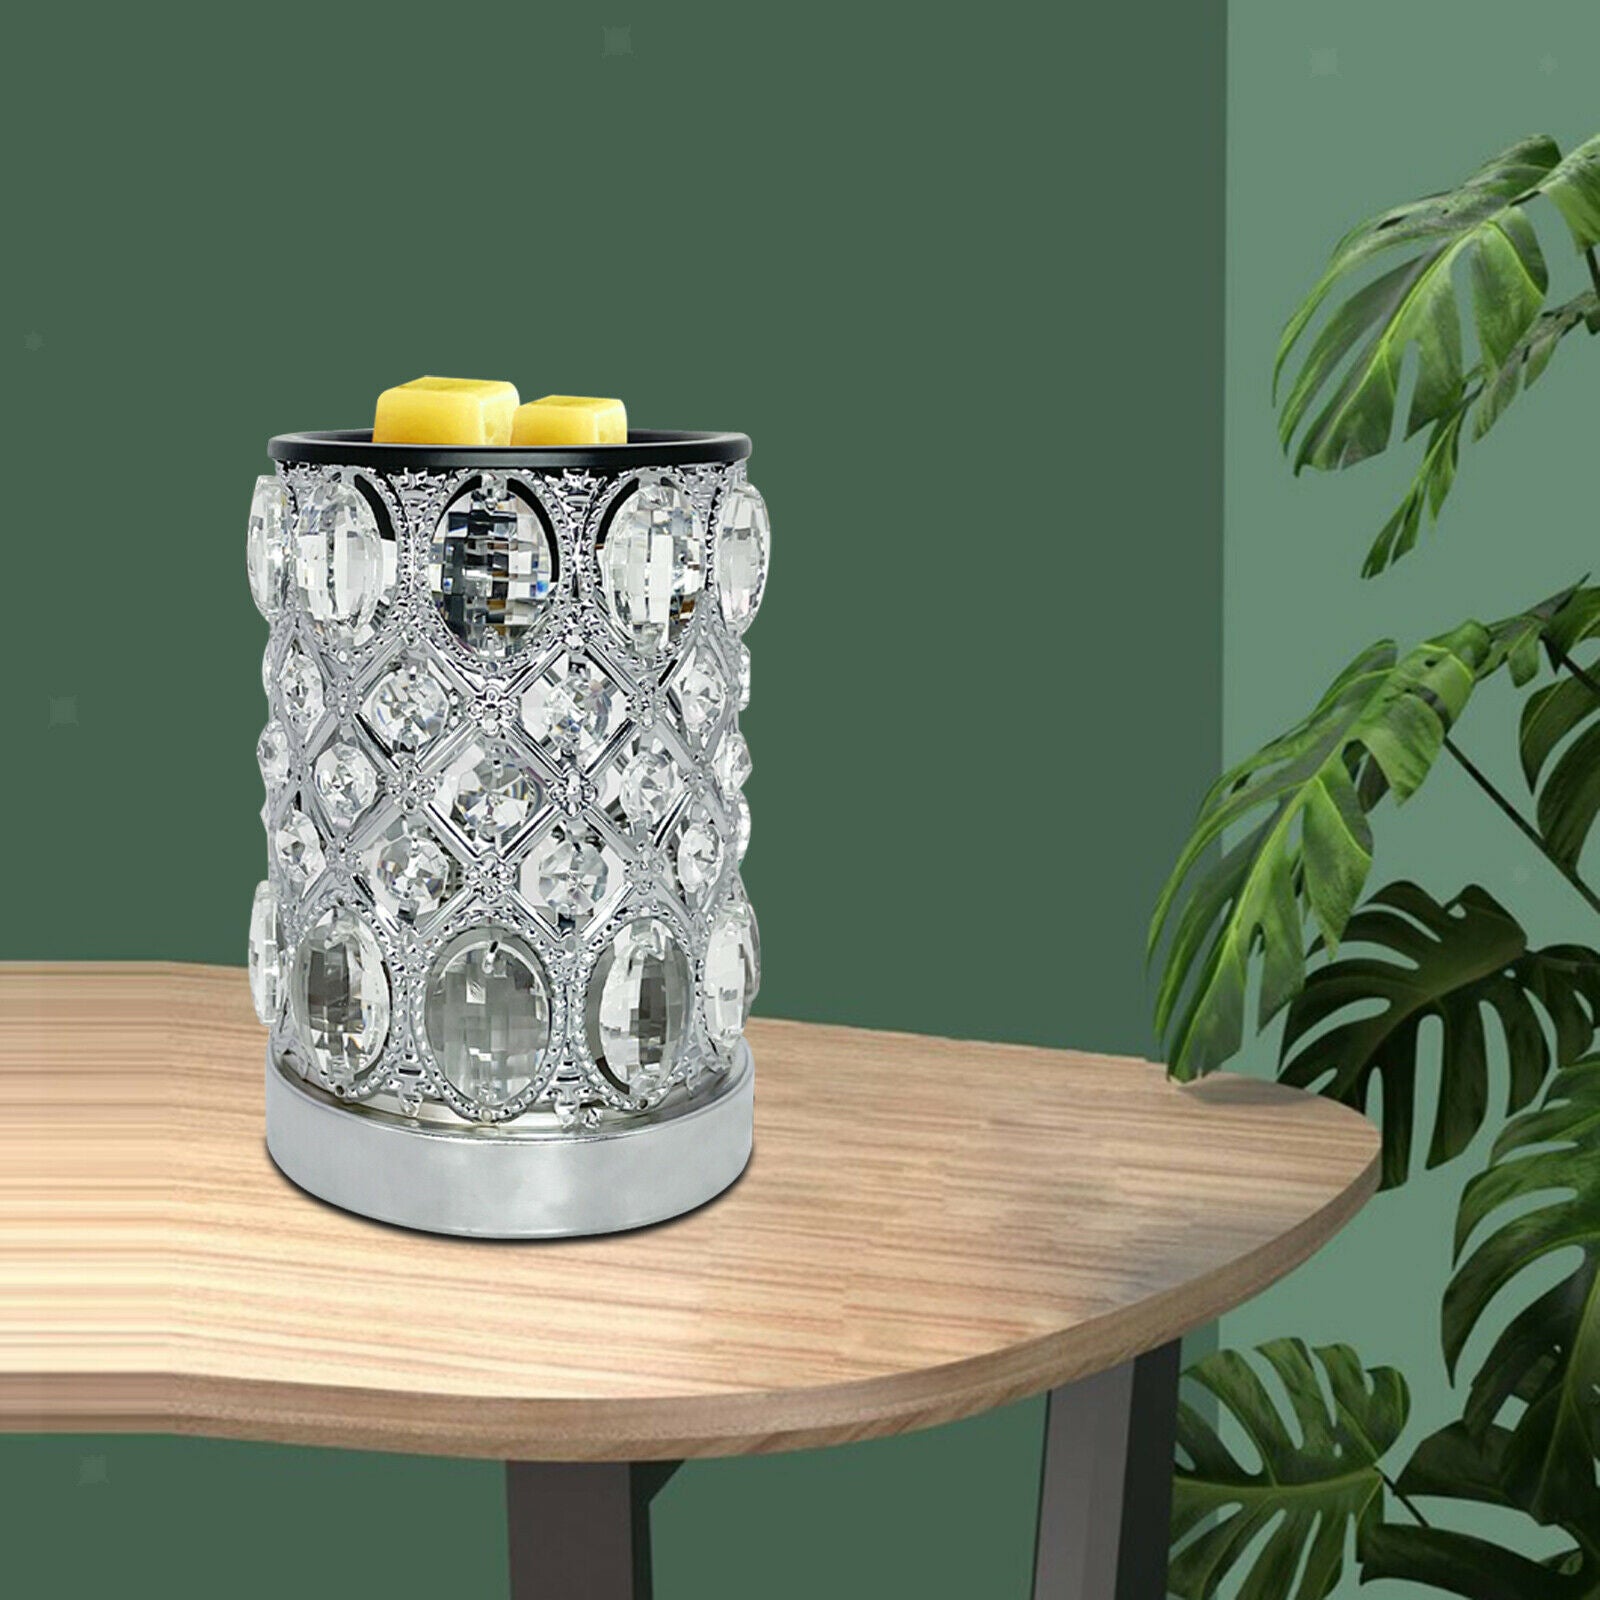 Crystal Candle Warmer Fragrance Wax Melt Lamp Table Light Home UK Plug